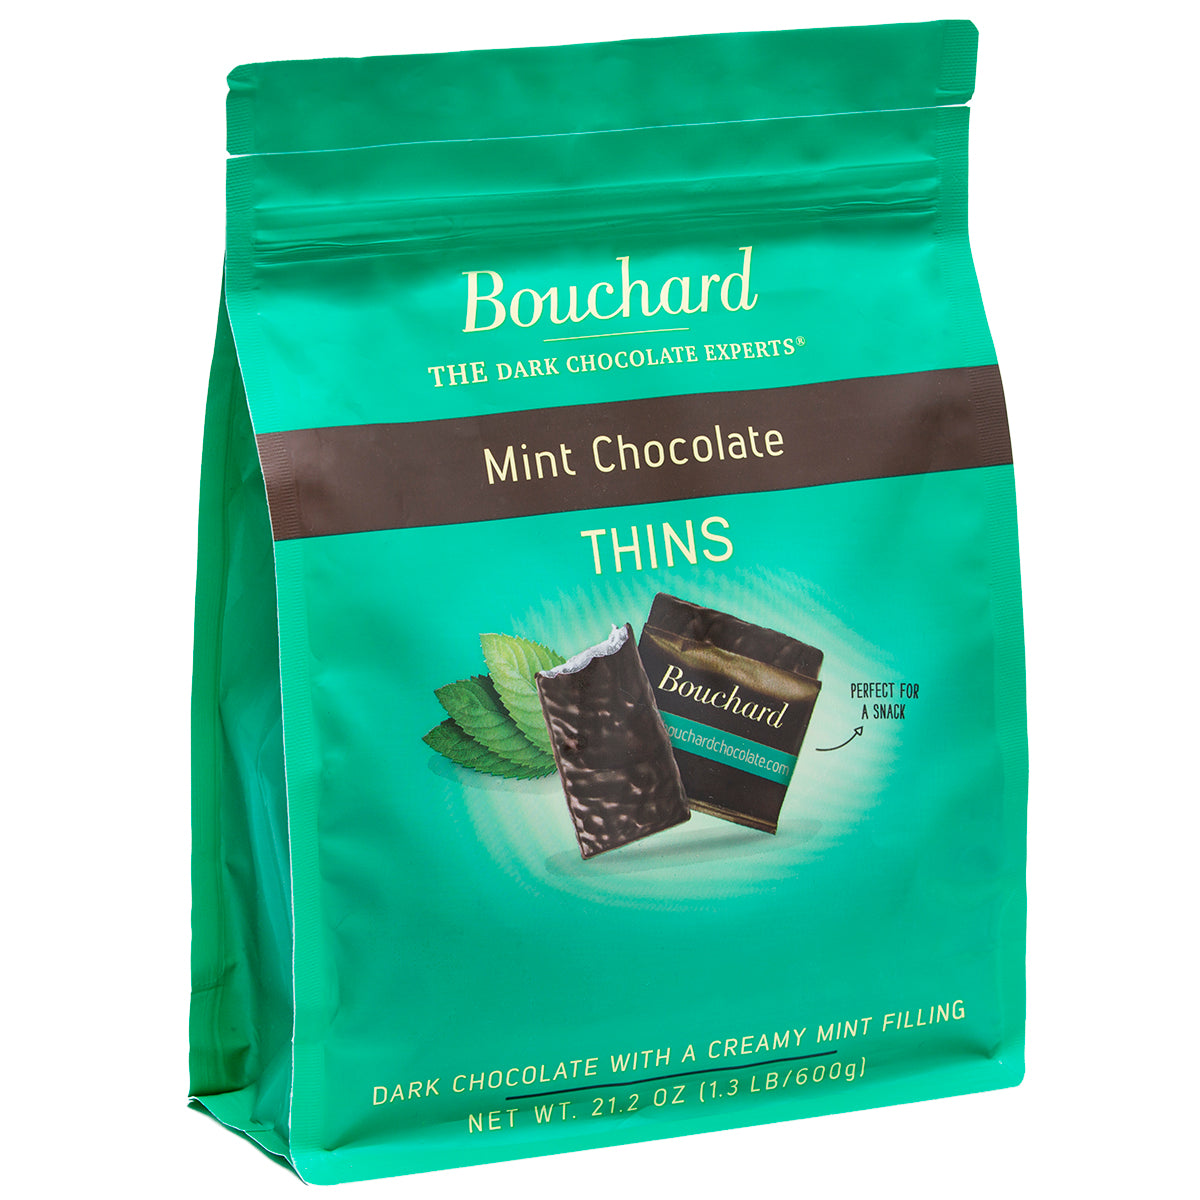 Dark Chocolate Mint Thins (72% Cacao) 21.2 OZ (1.3 LB/600g)